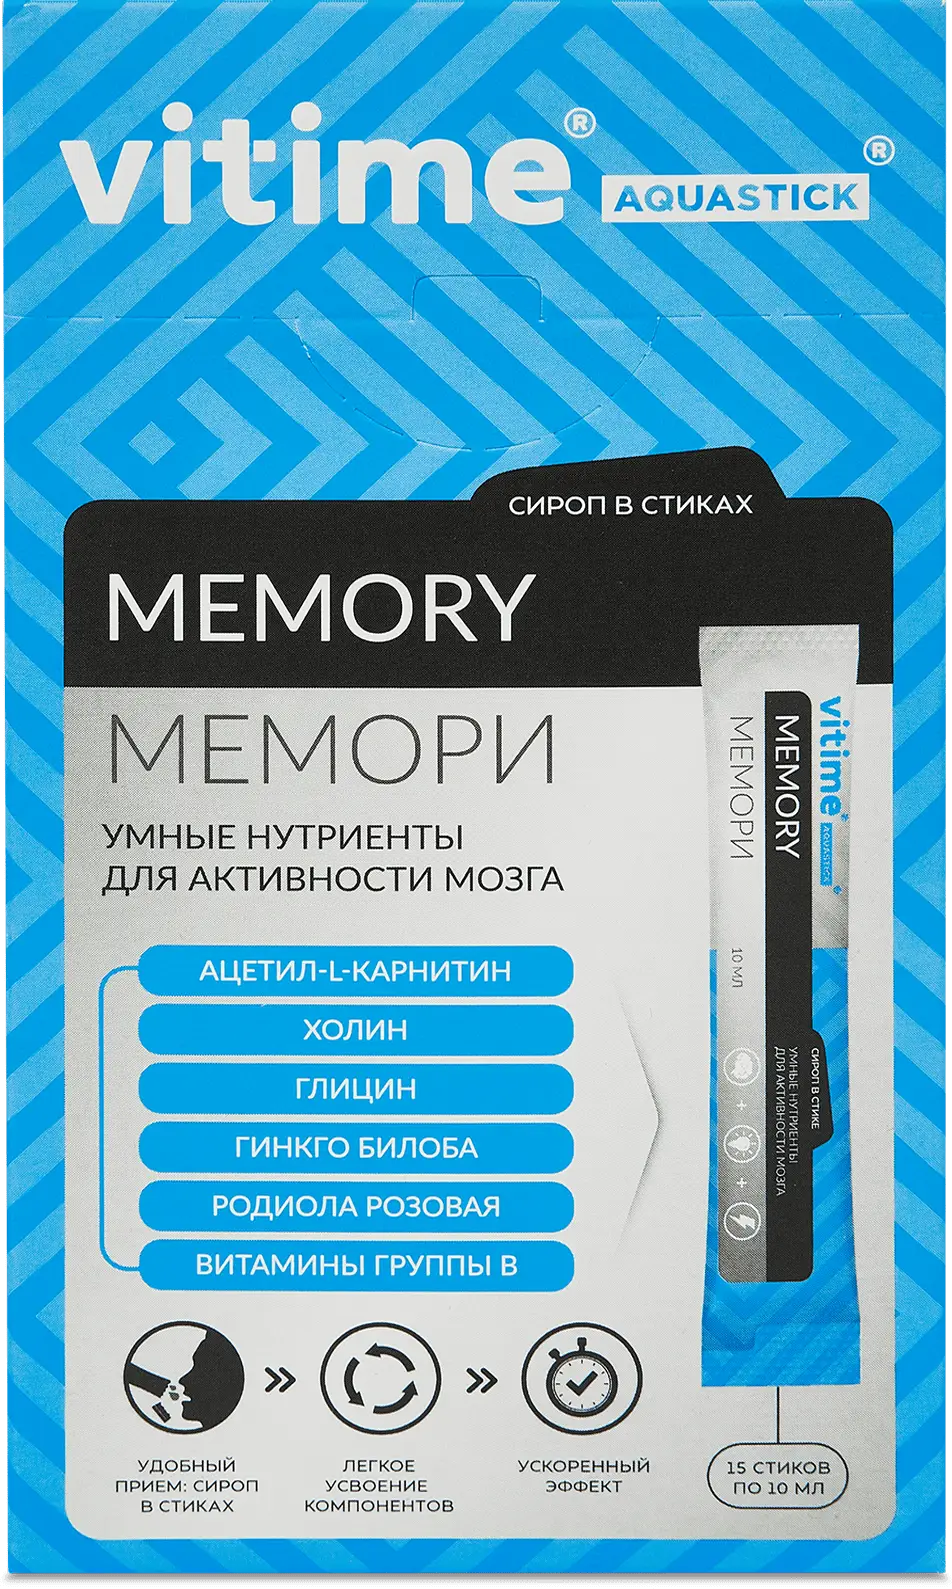 VITime® Aquastick® Memory